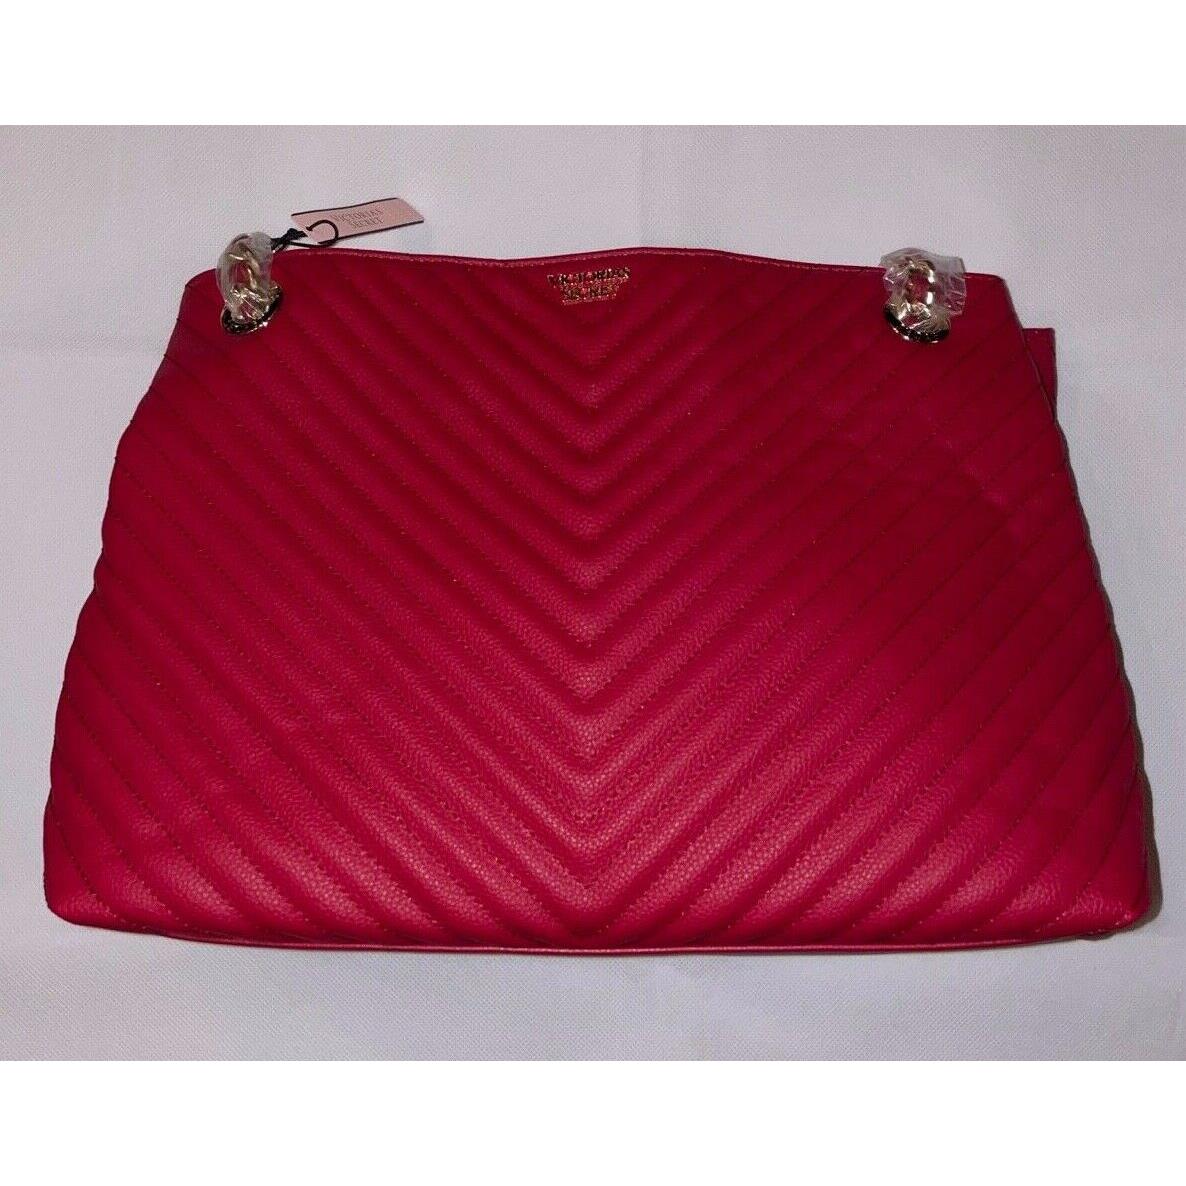 Victoria`s Secret Red Bag Purse with Zip Closure - Victoria's